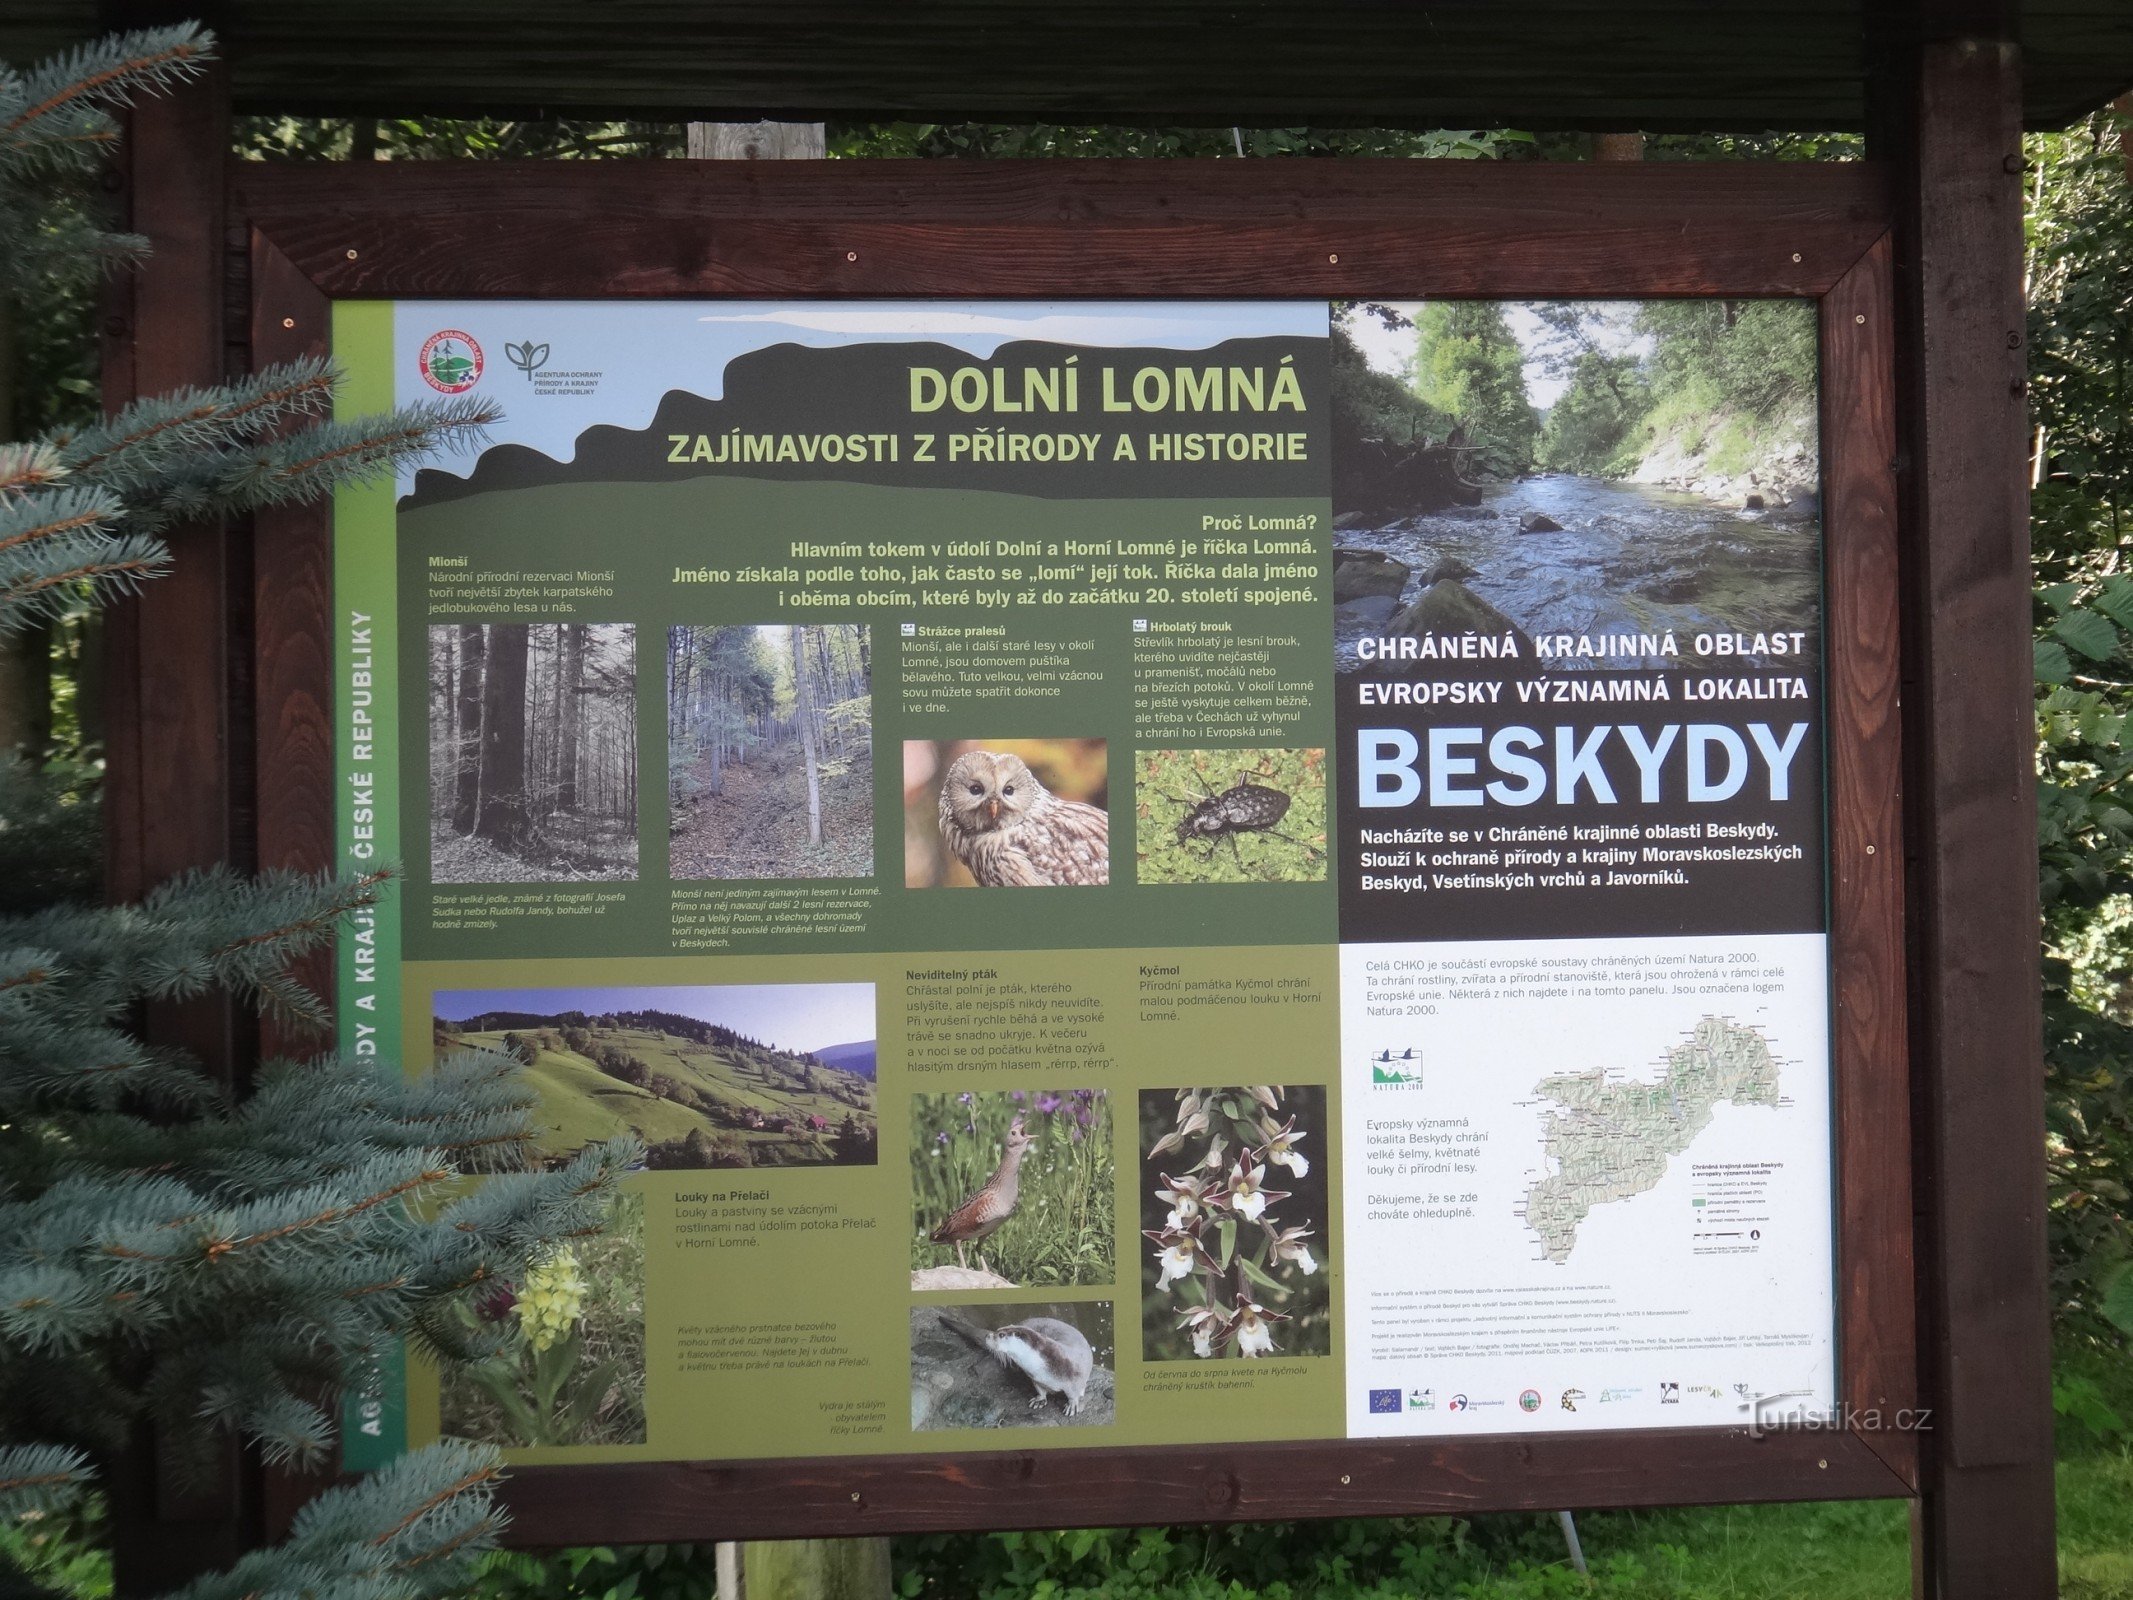 Dolní Lomná over geschiedenis en natuur